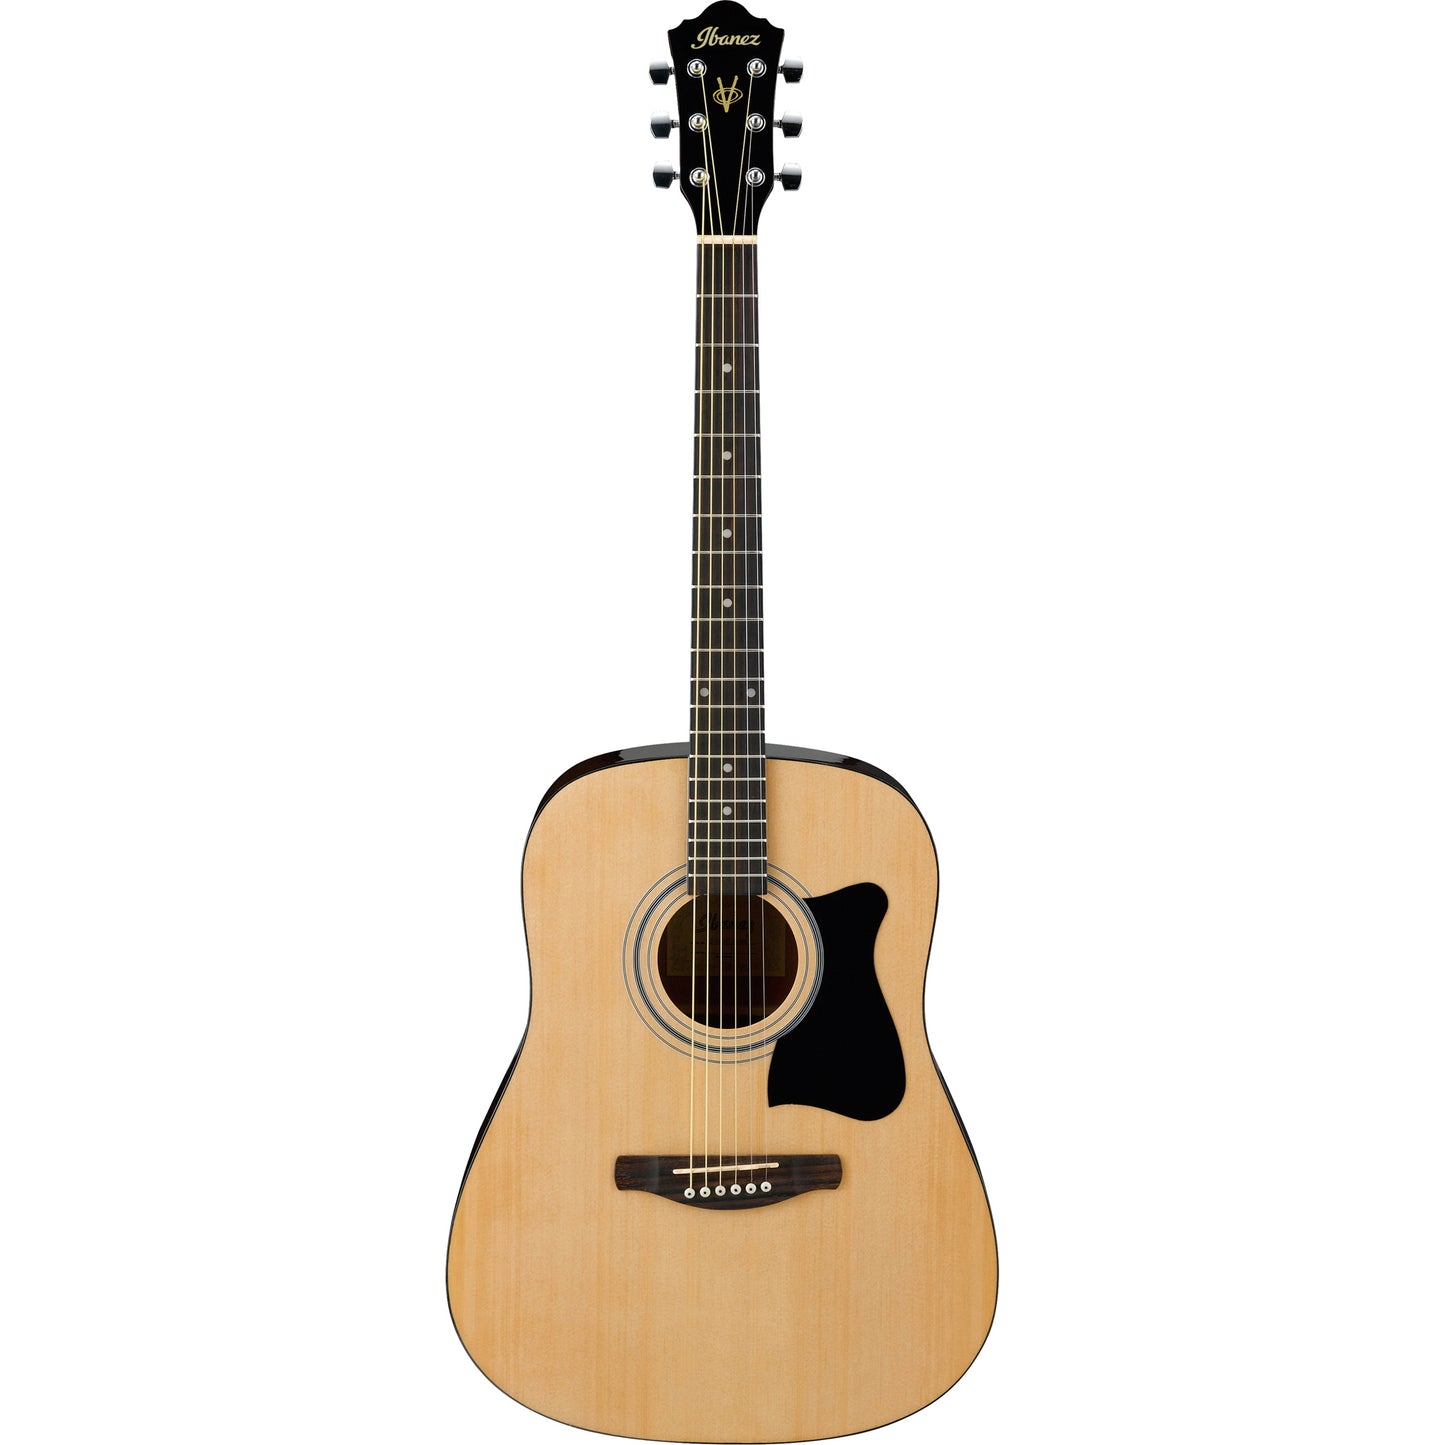 Ibanez IJV50 JAMPACK Acoustic Guitar Package (Natural)